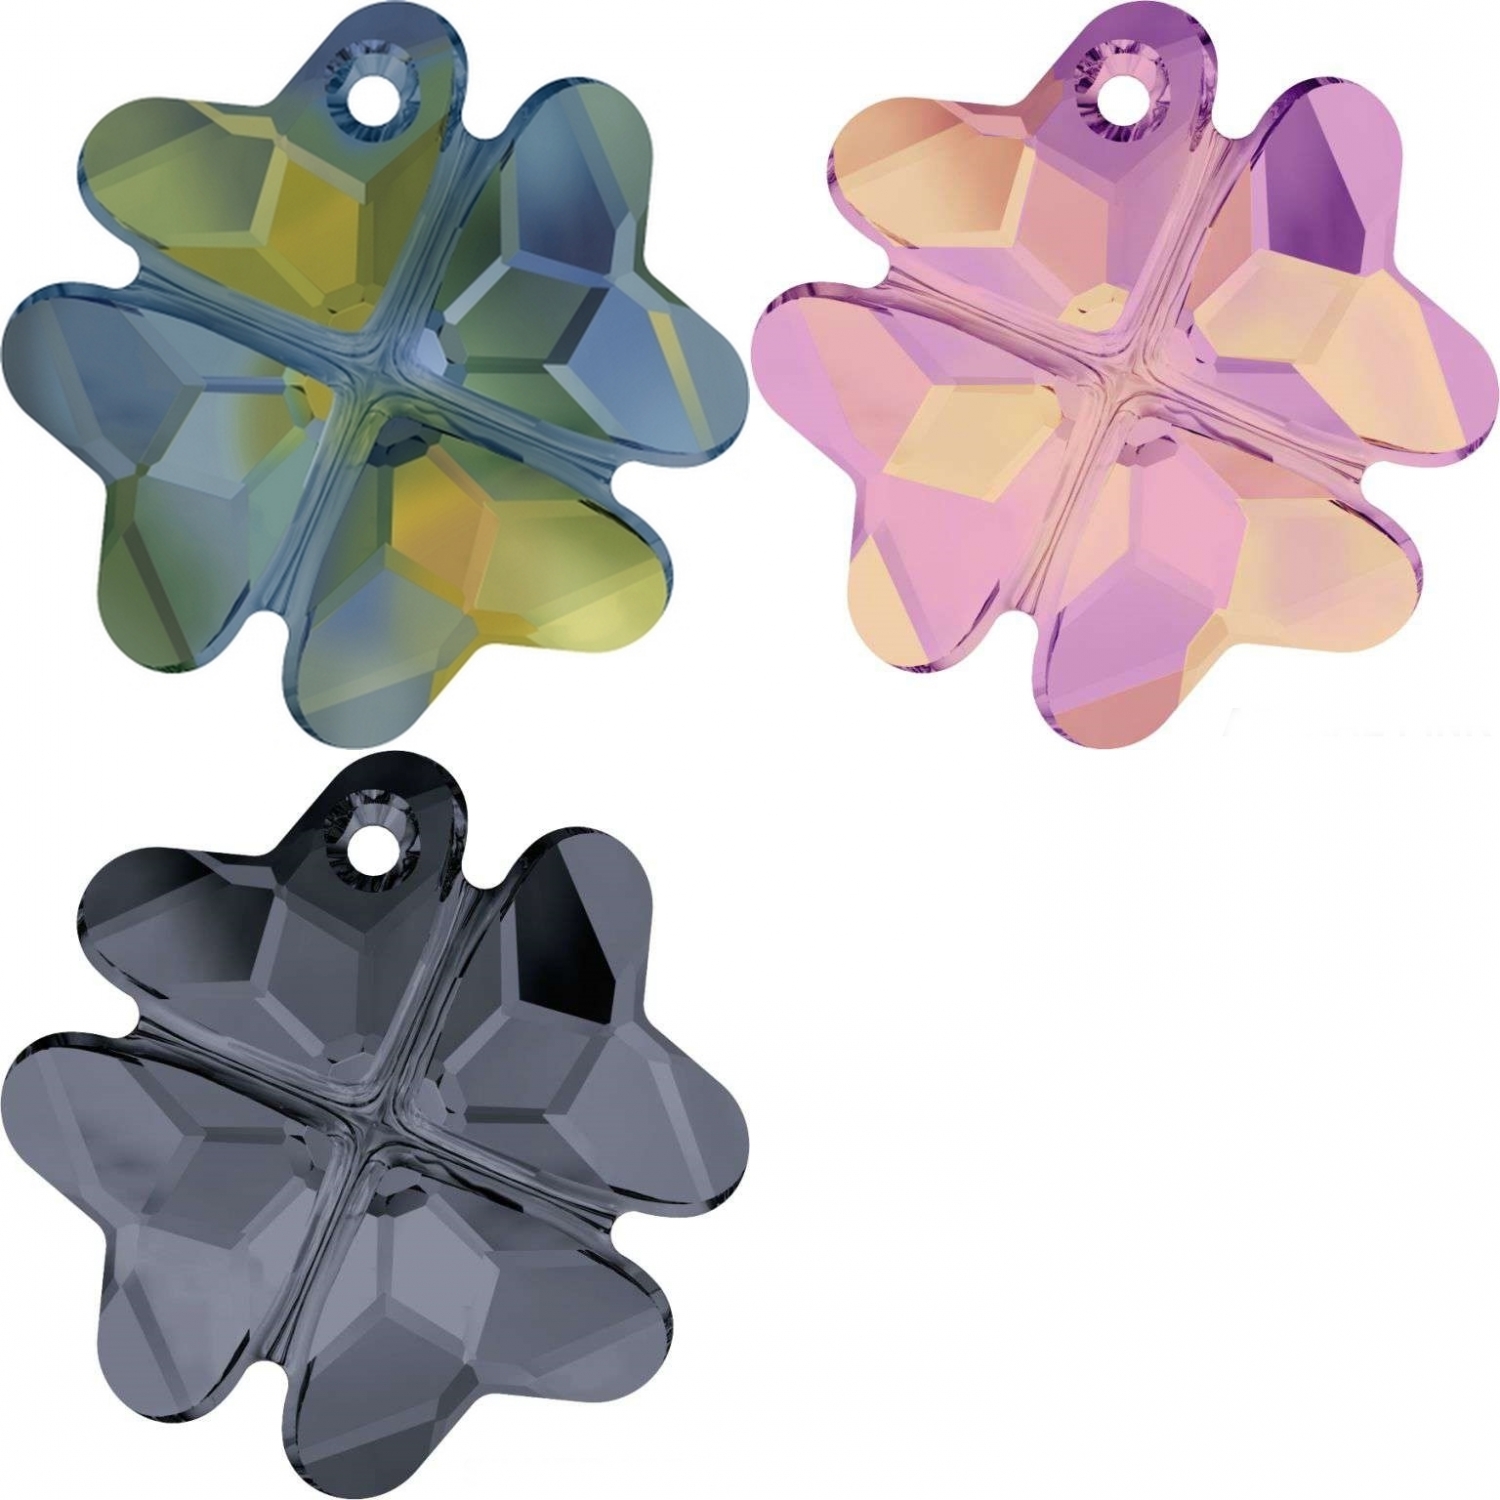 Swarovski Pendant, 28 mm, Different Colors (1 piece)Code: 6764-MM28